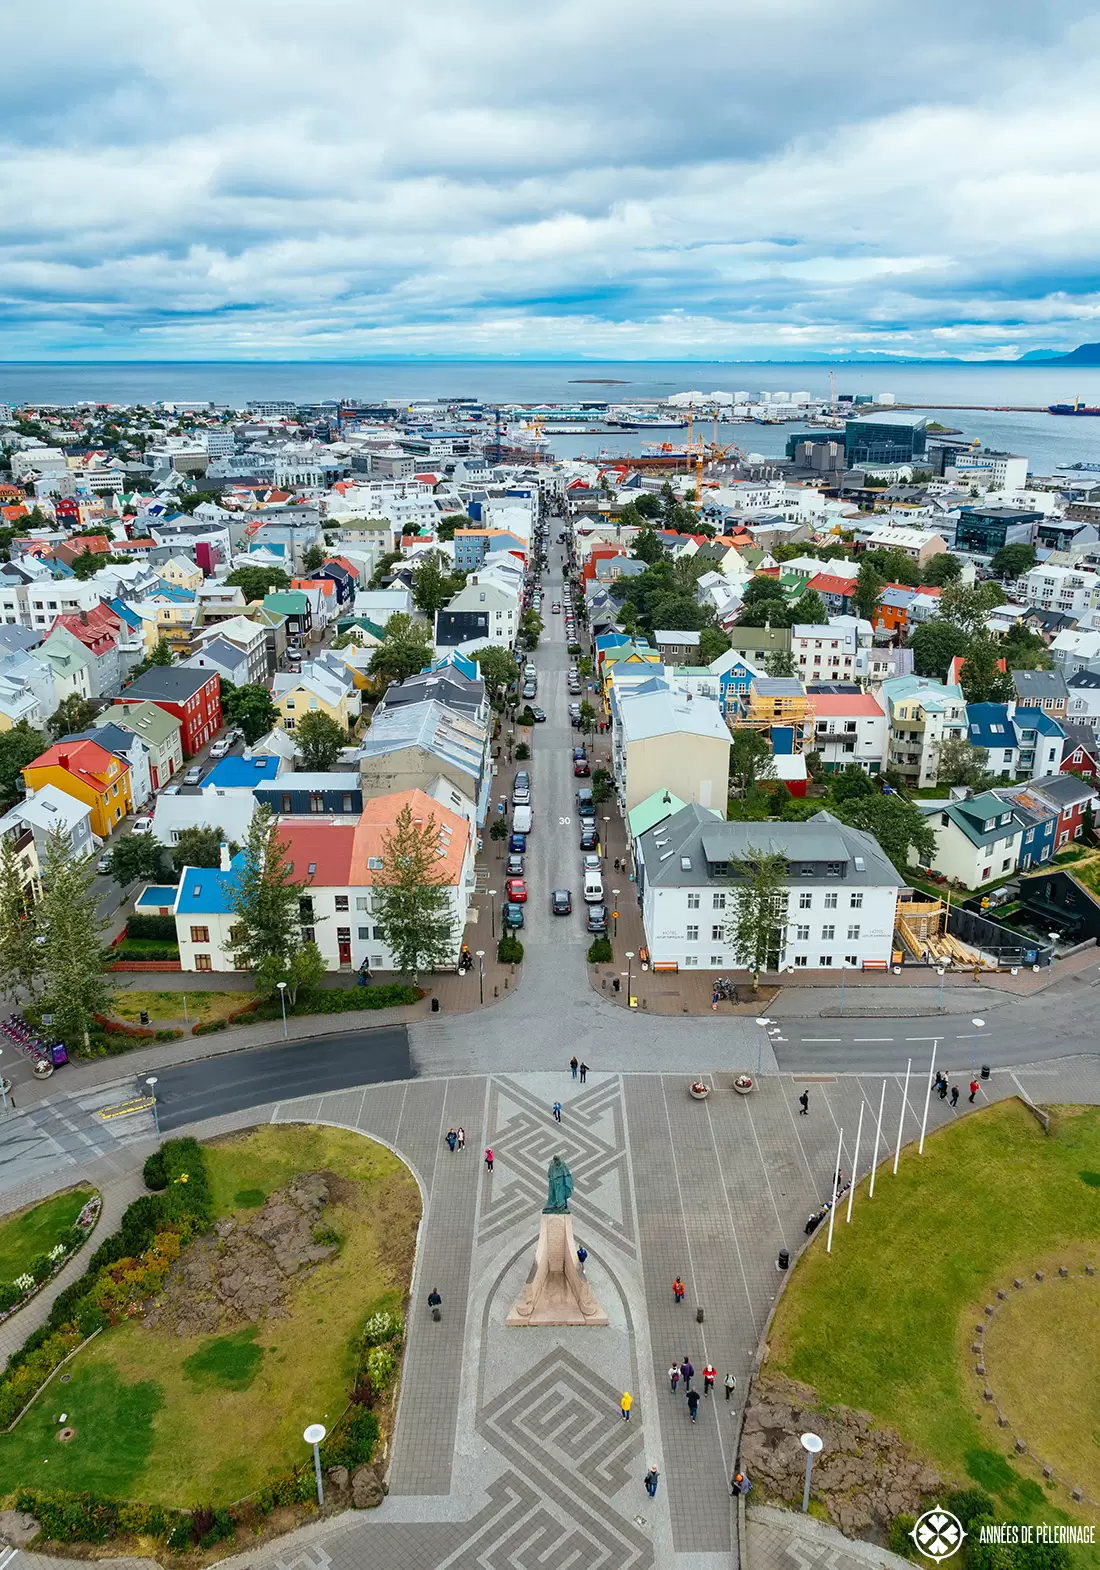 travel guide to reykjavik iceland